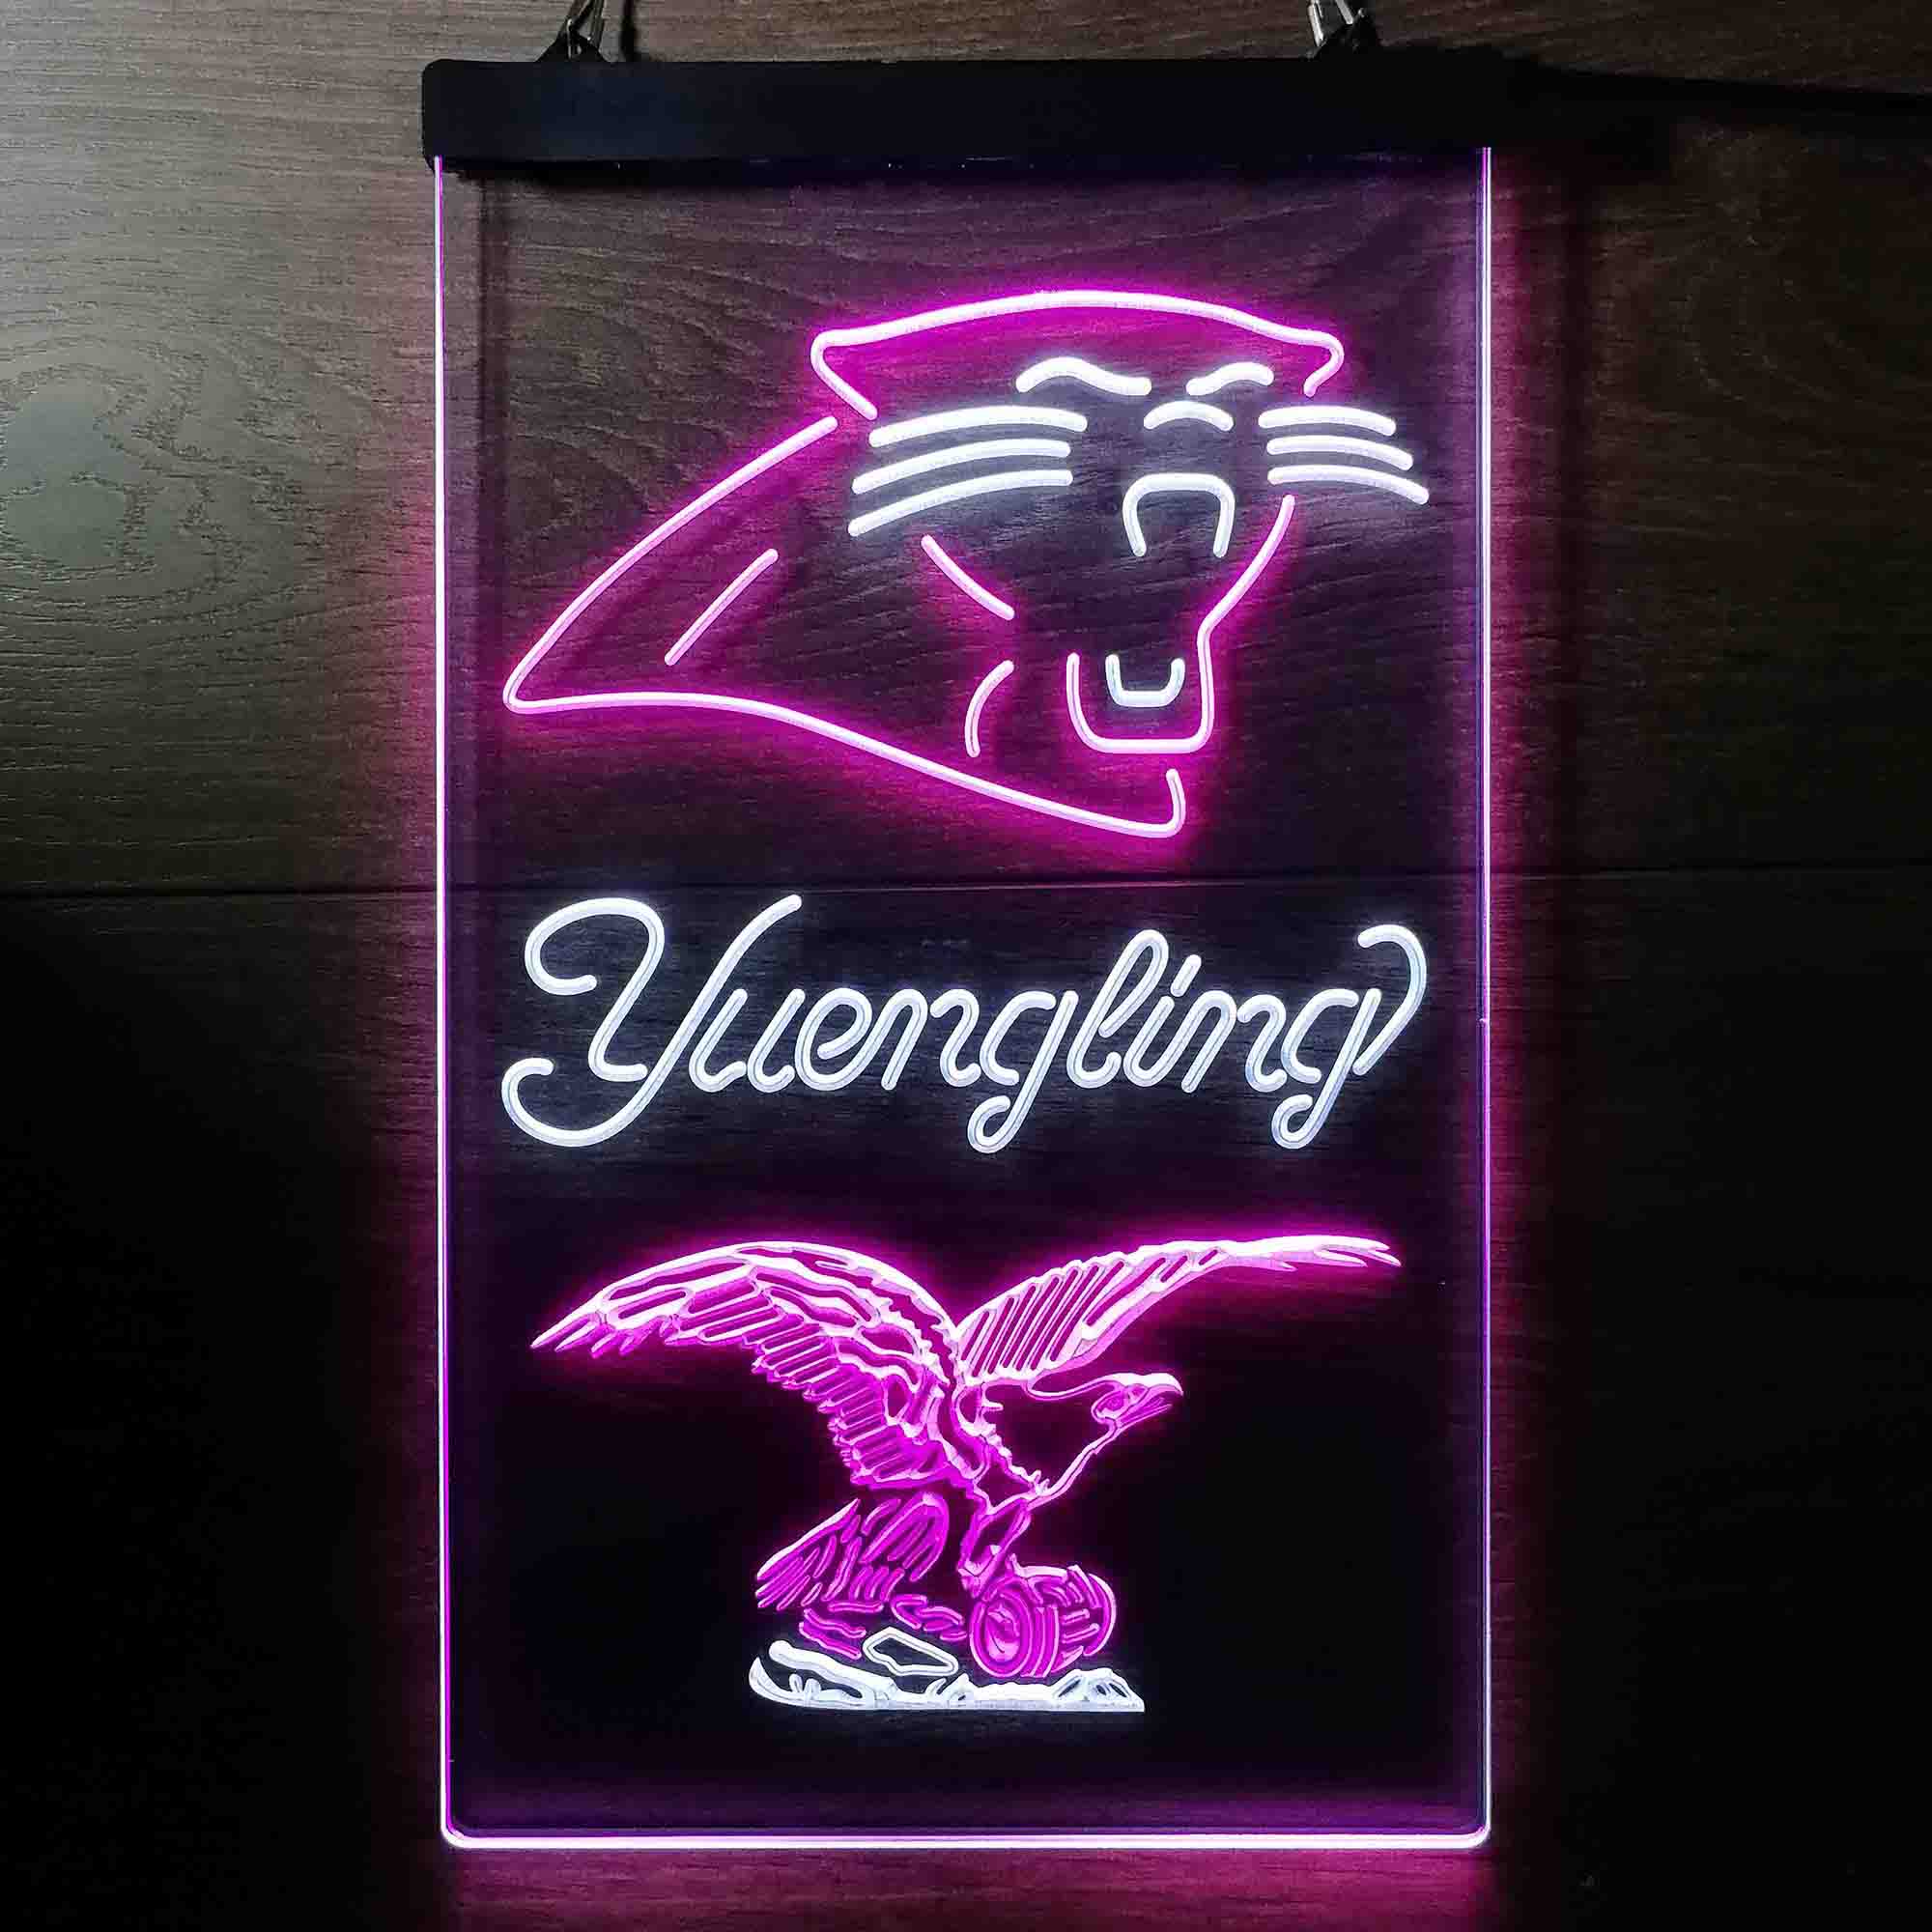 Yuengling Bar Carolina Panthers Est. 1995 LED Neon Sign